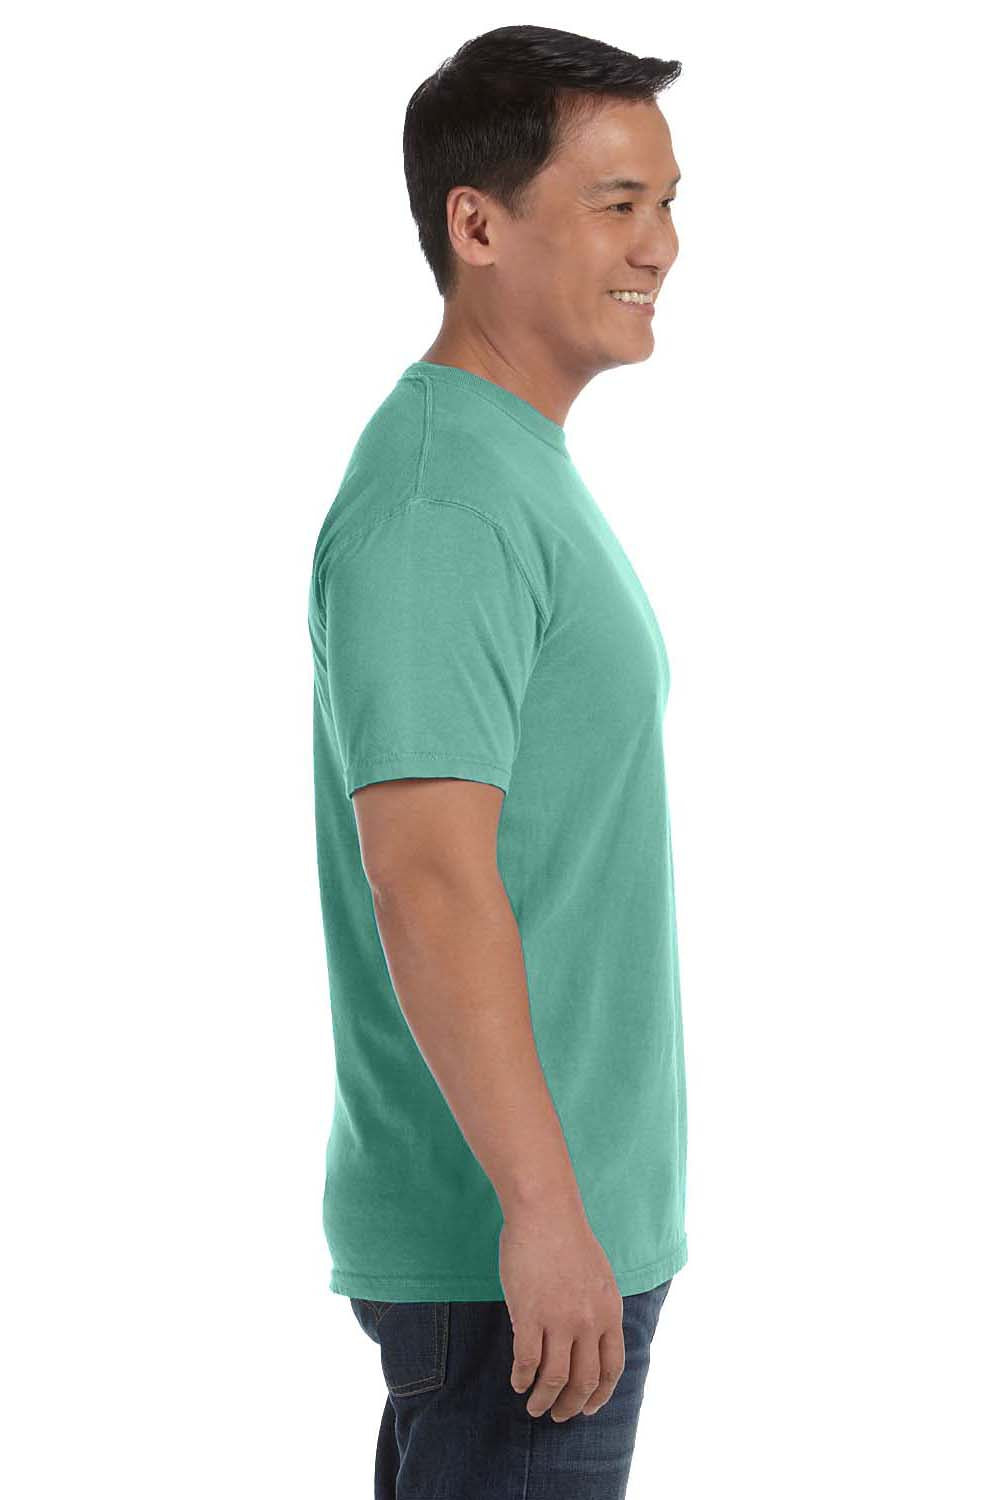 Comfort Colors C1717 Mens Short Sleeve Crewneck T-Shirt Island Reef Green Side